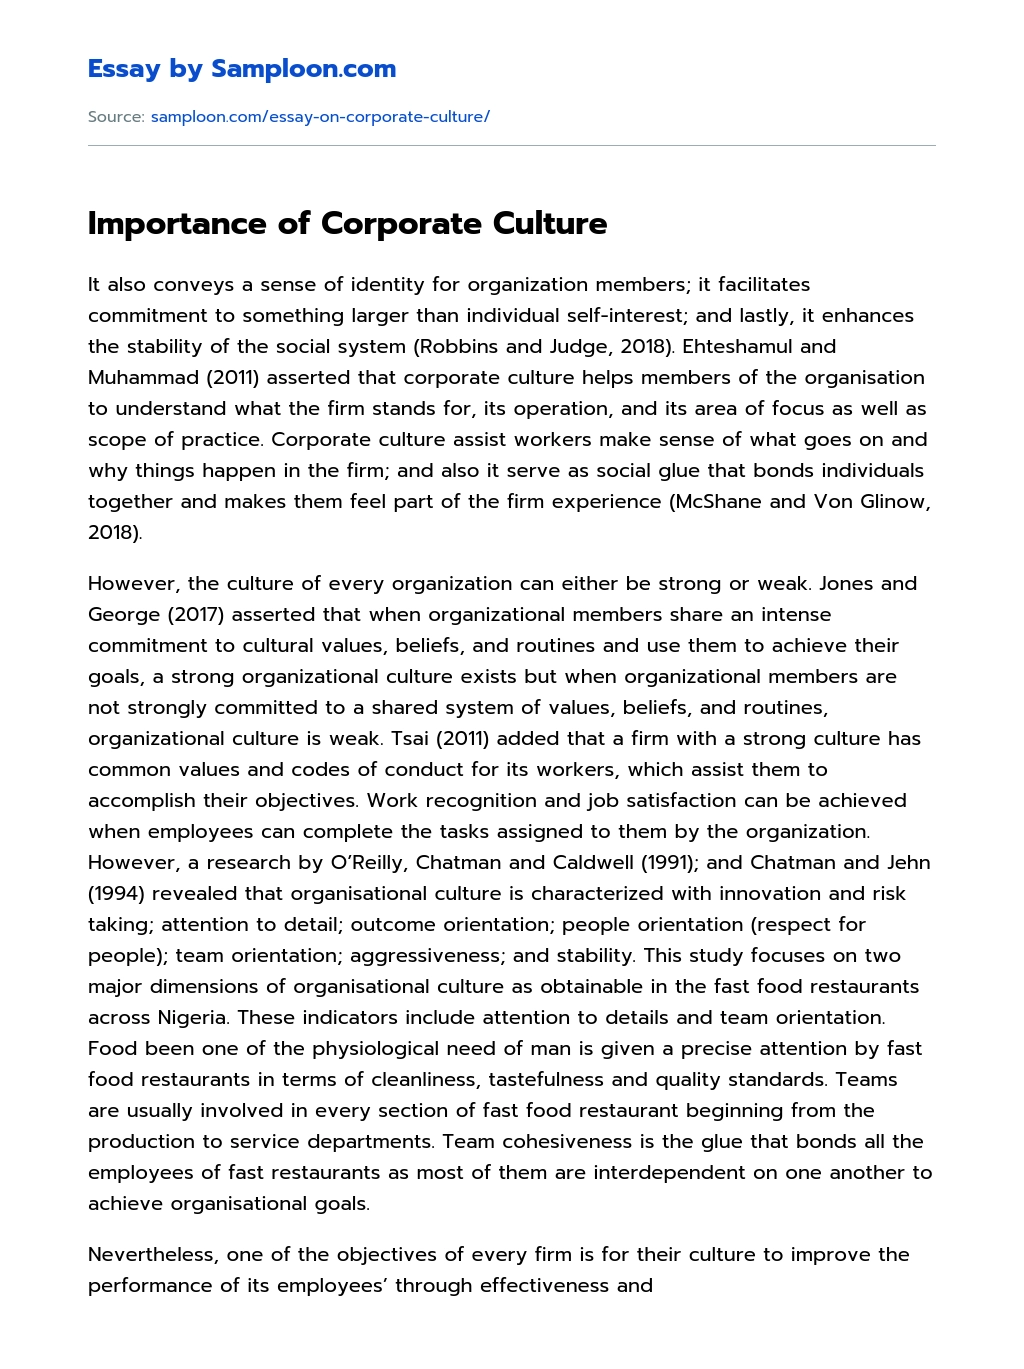 Importance of Corporate Culture essay